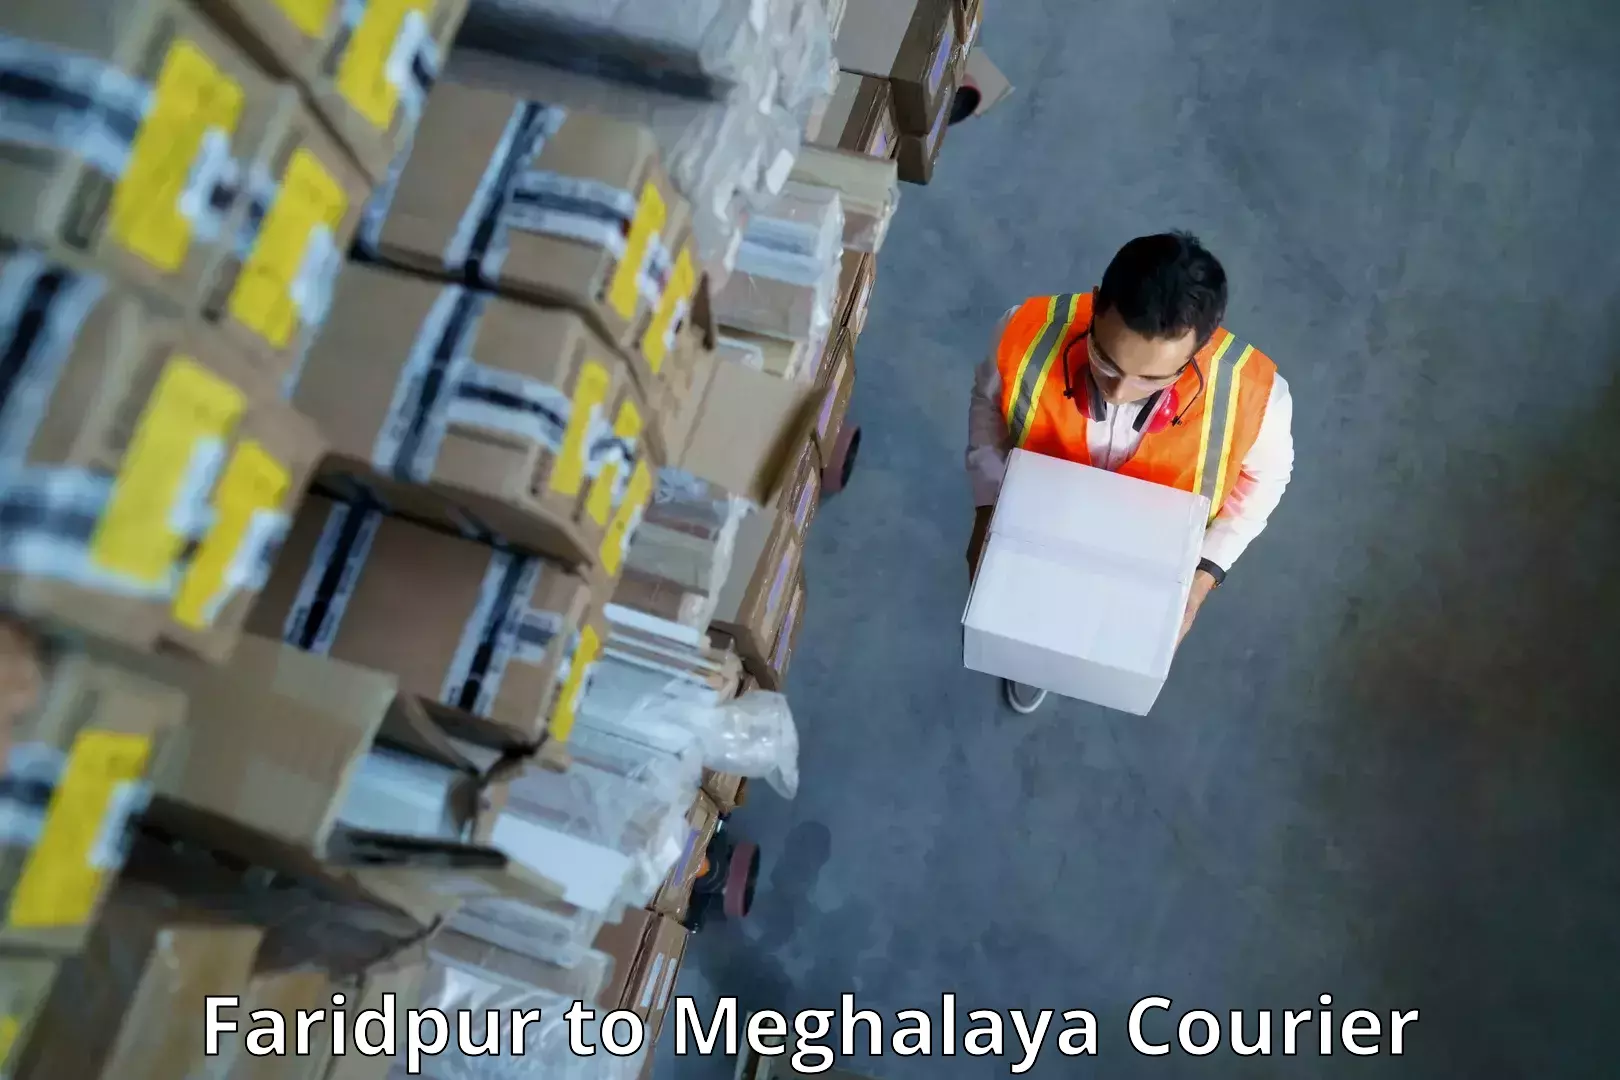 Urban courier service Faridpur to Dkhiah West